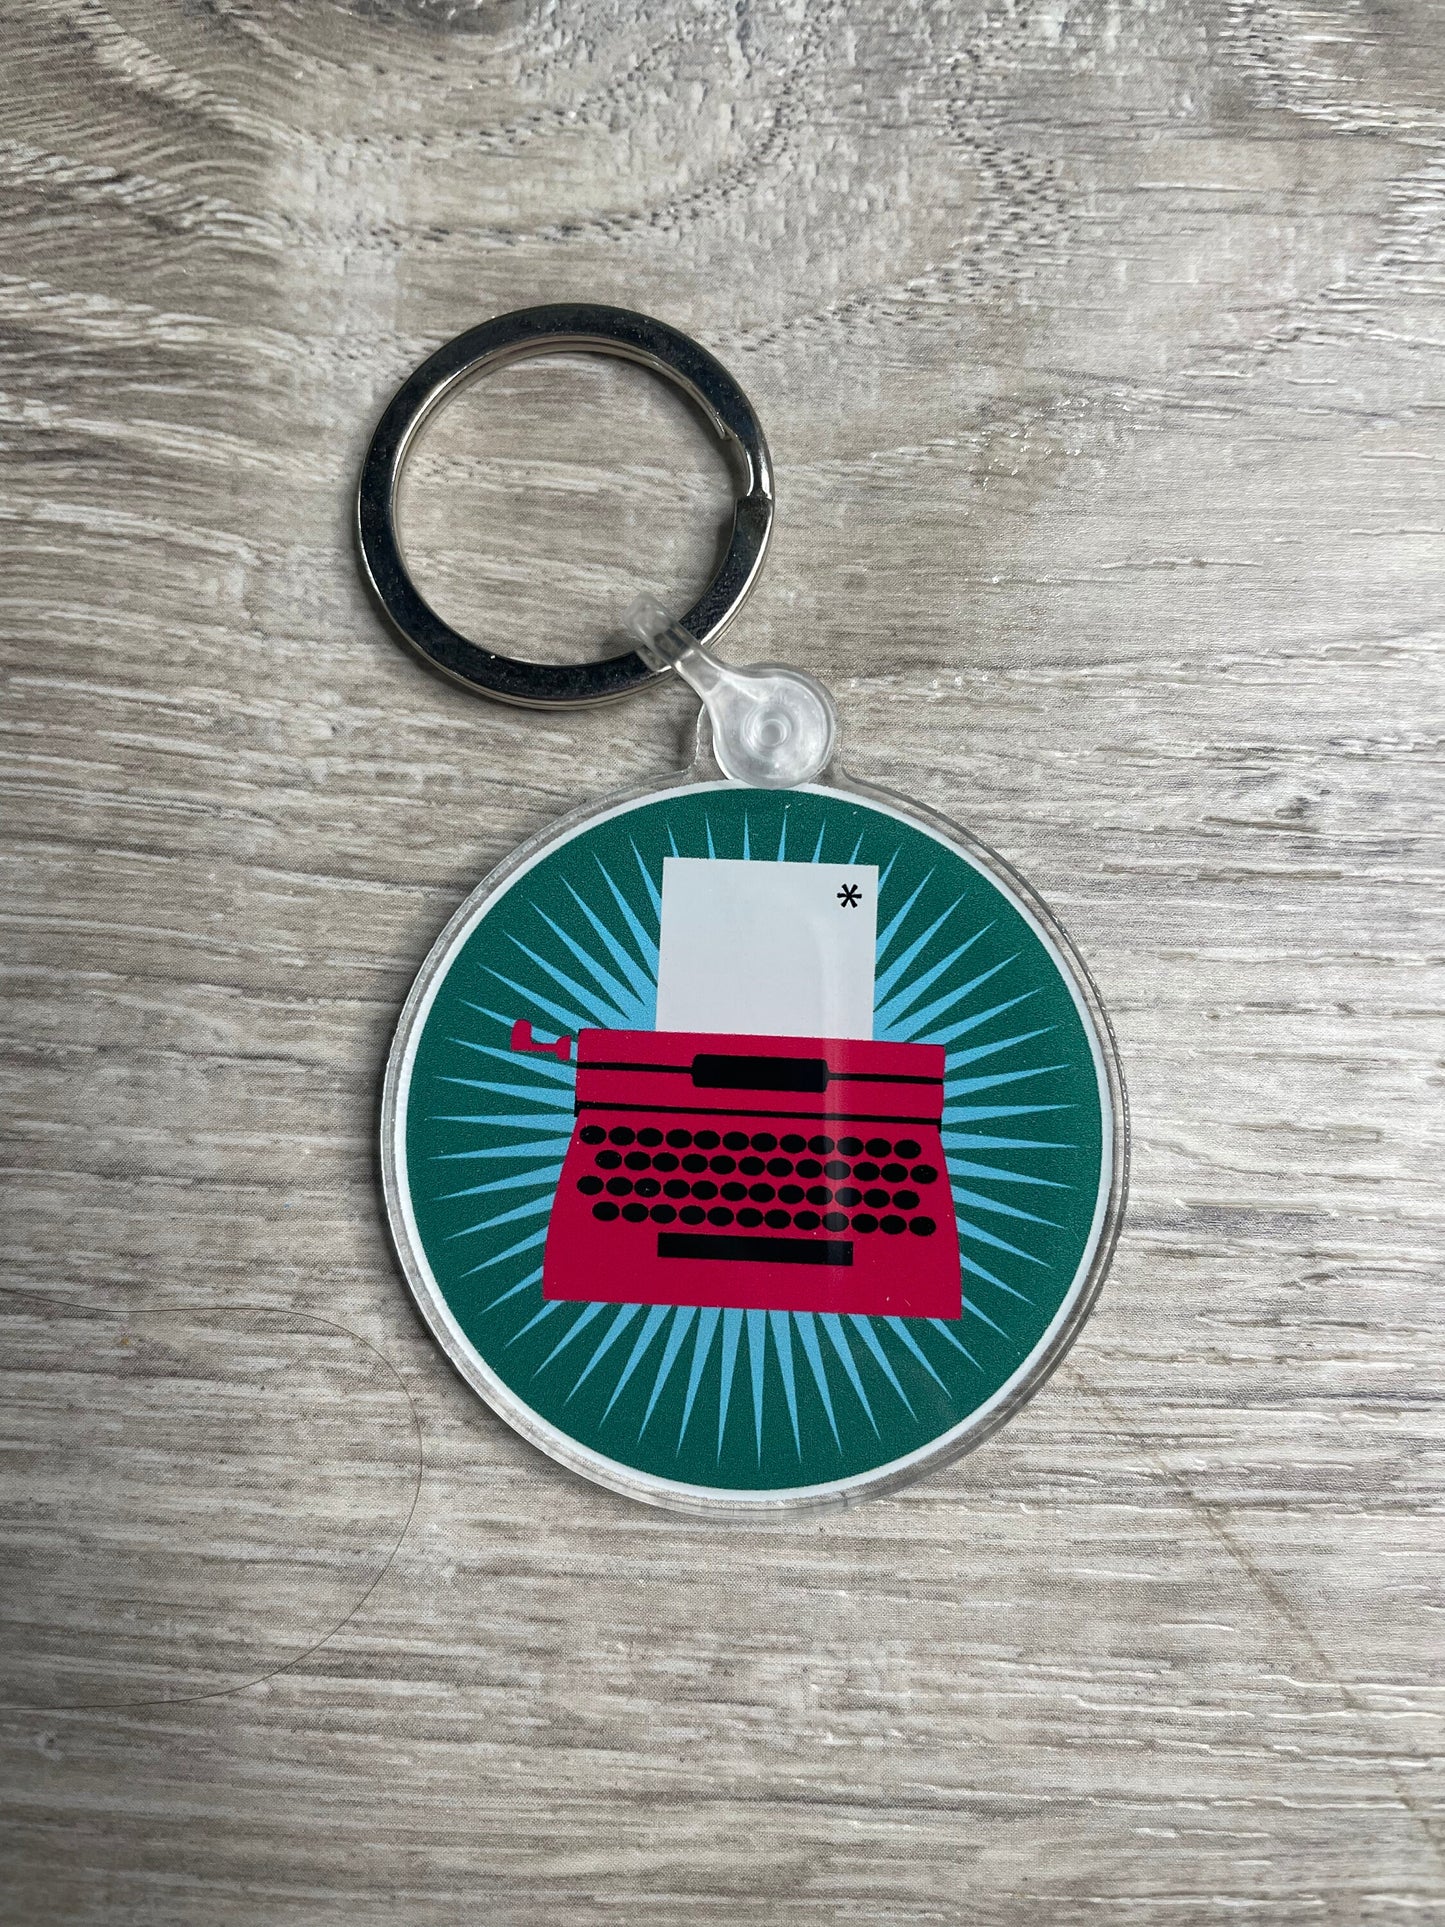 Typewriter Acrylic Key Chain, Dance Gift